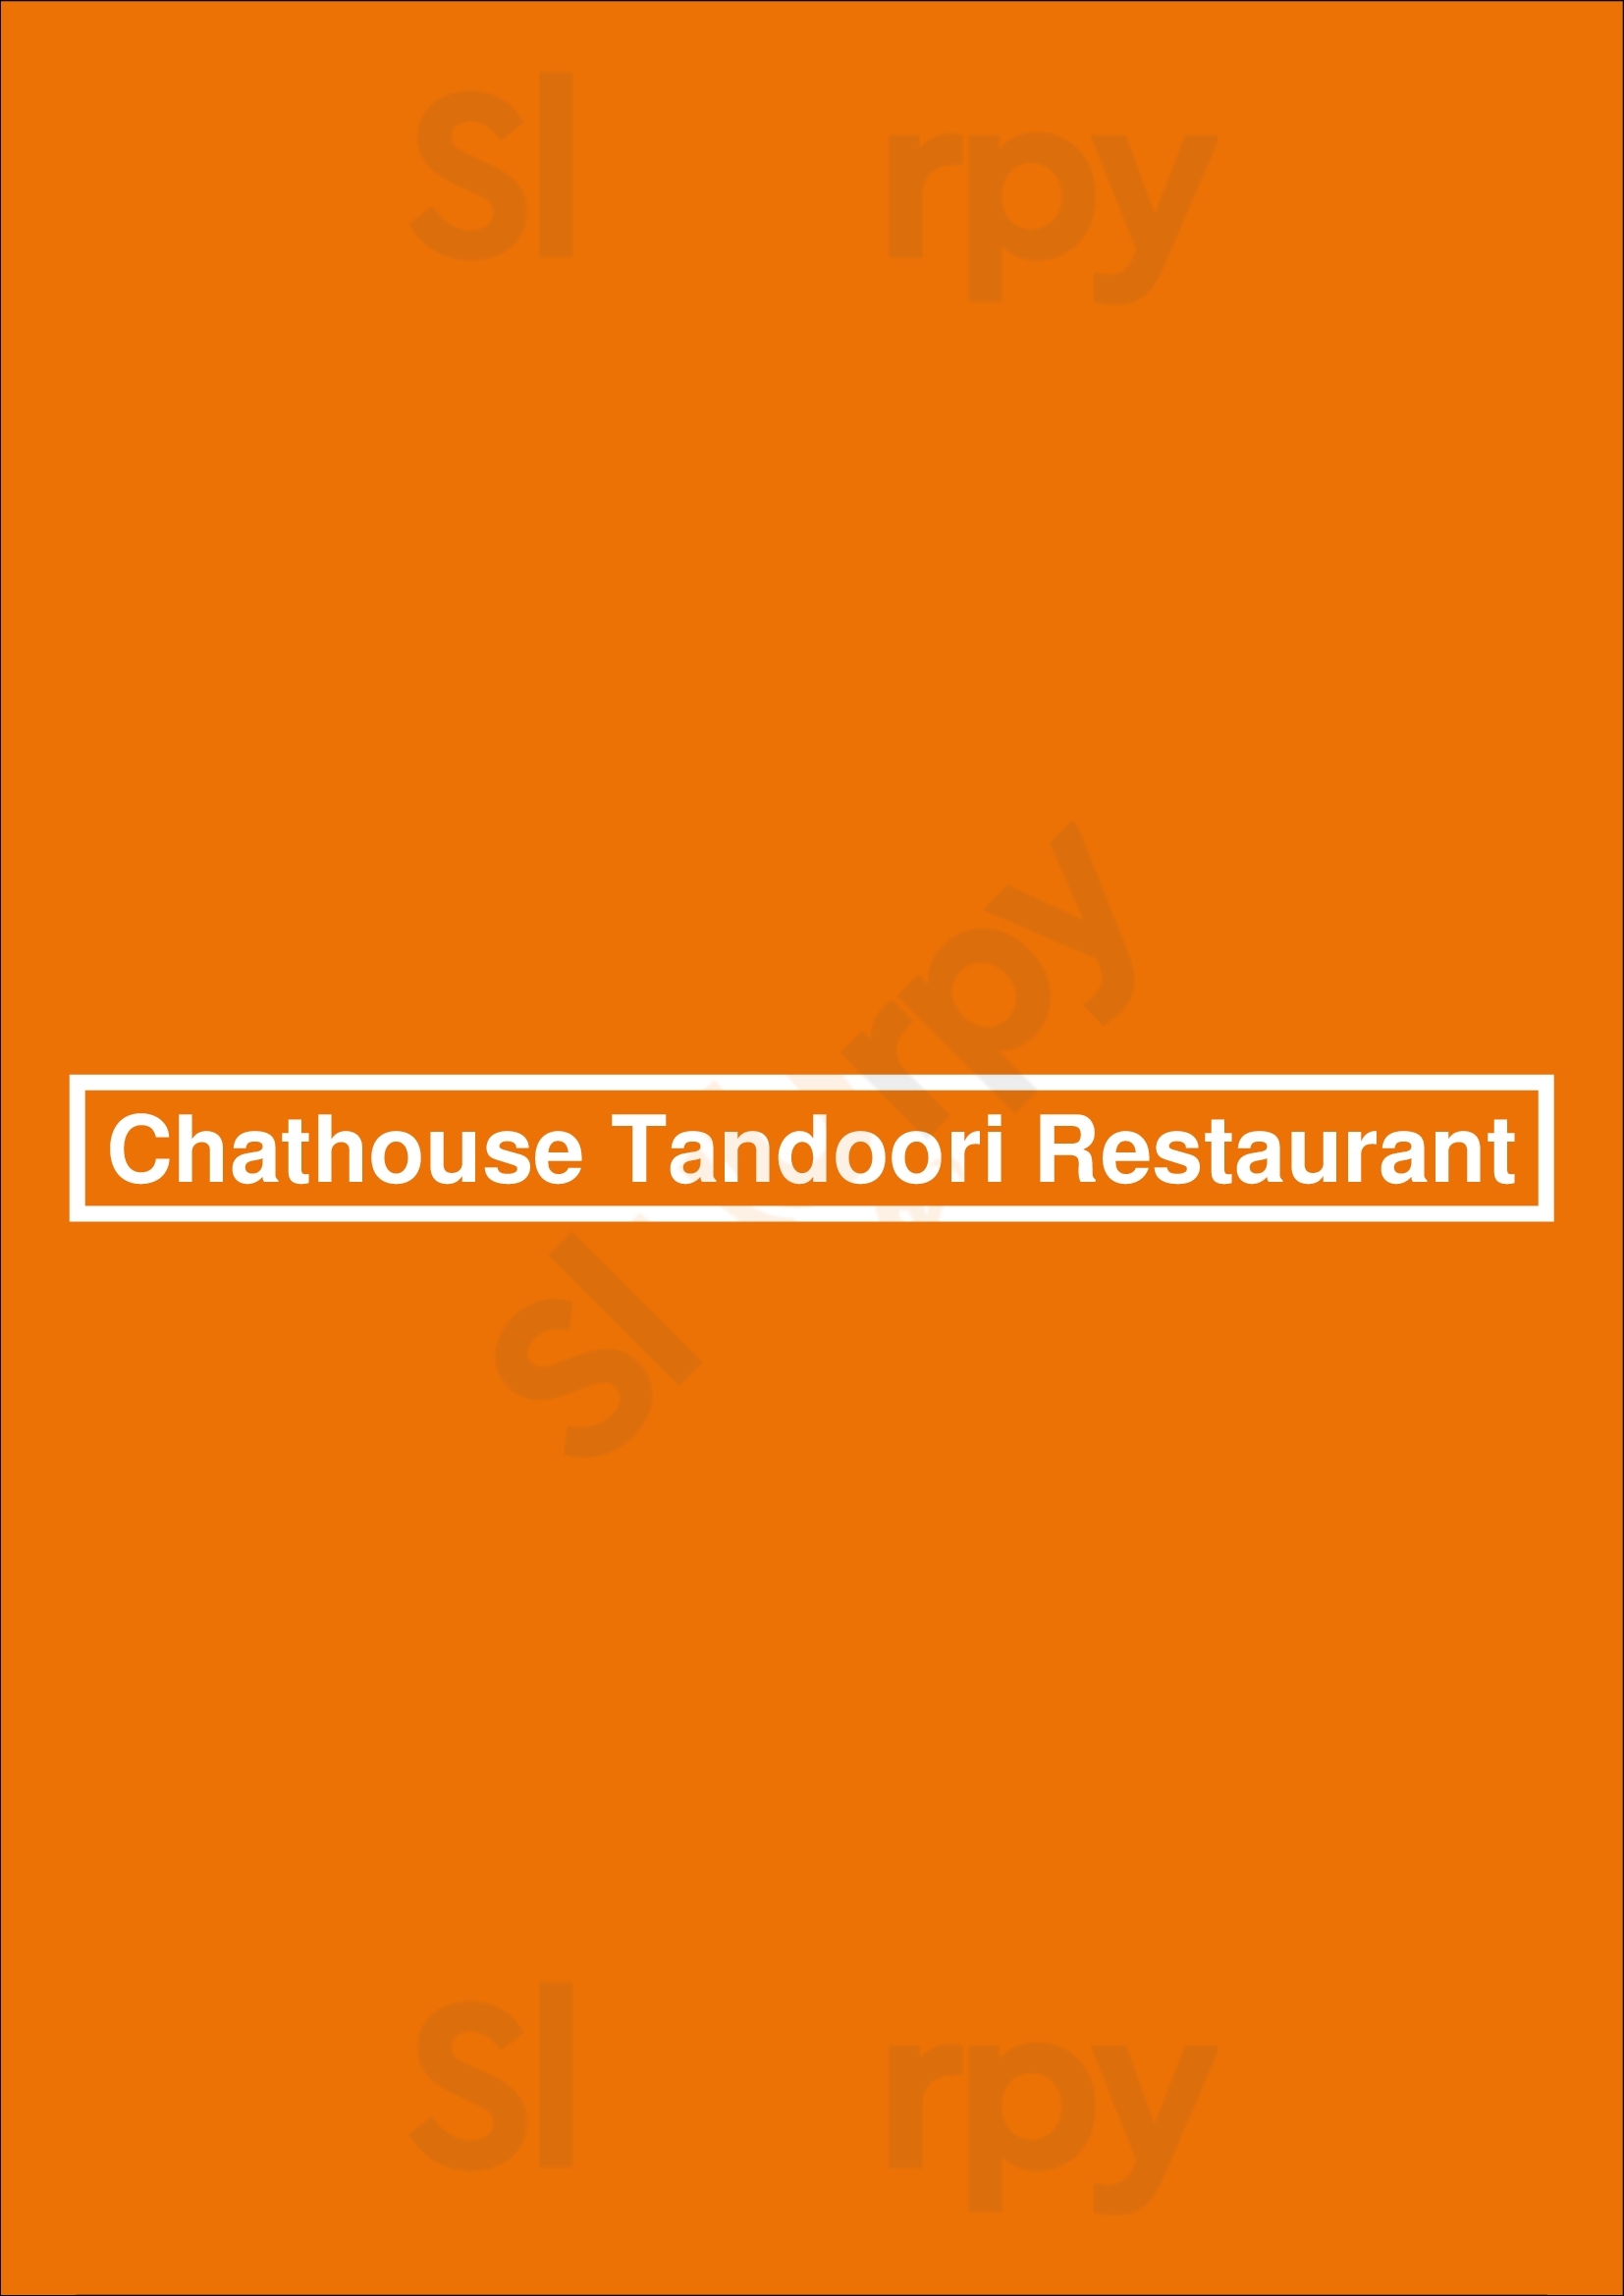 Chathouse Tandoori Restaurant Croydon Menu - 1